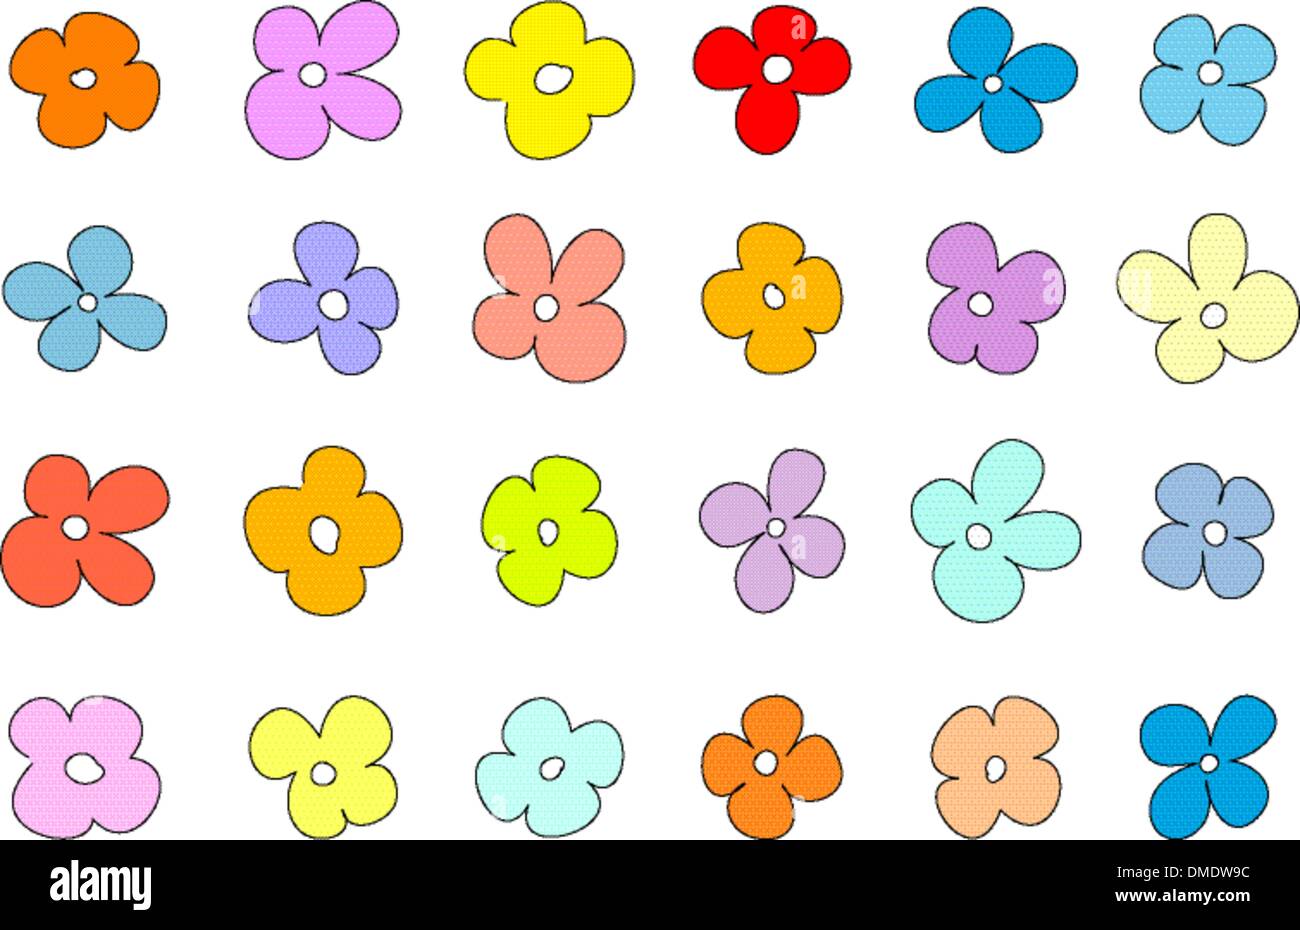 Simple flower pattern Stock Vector